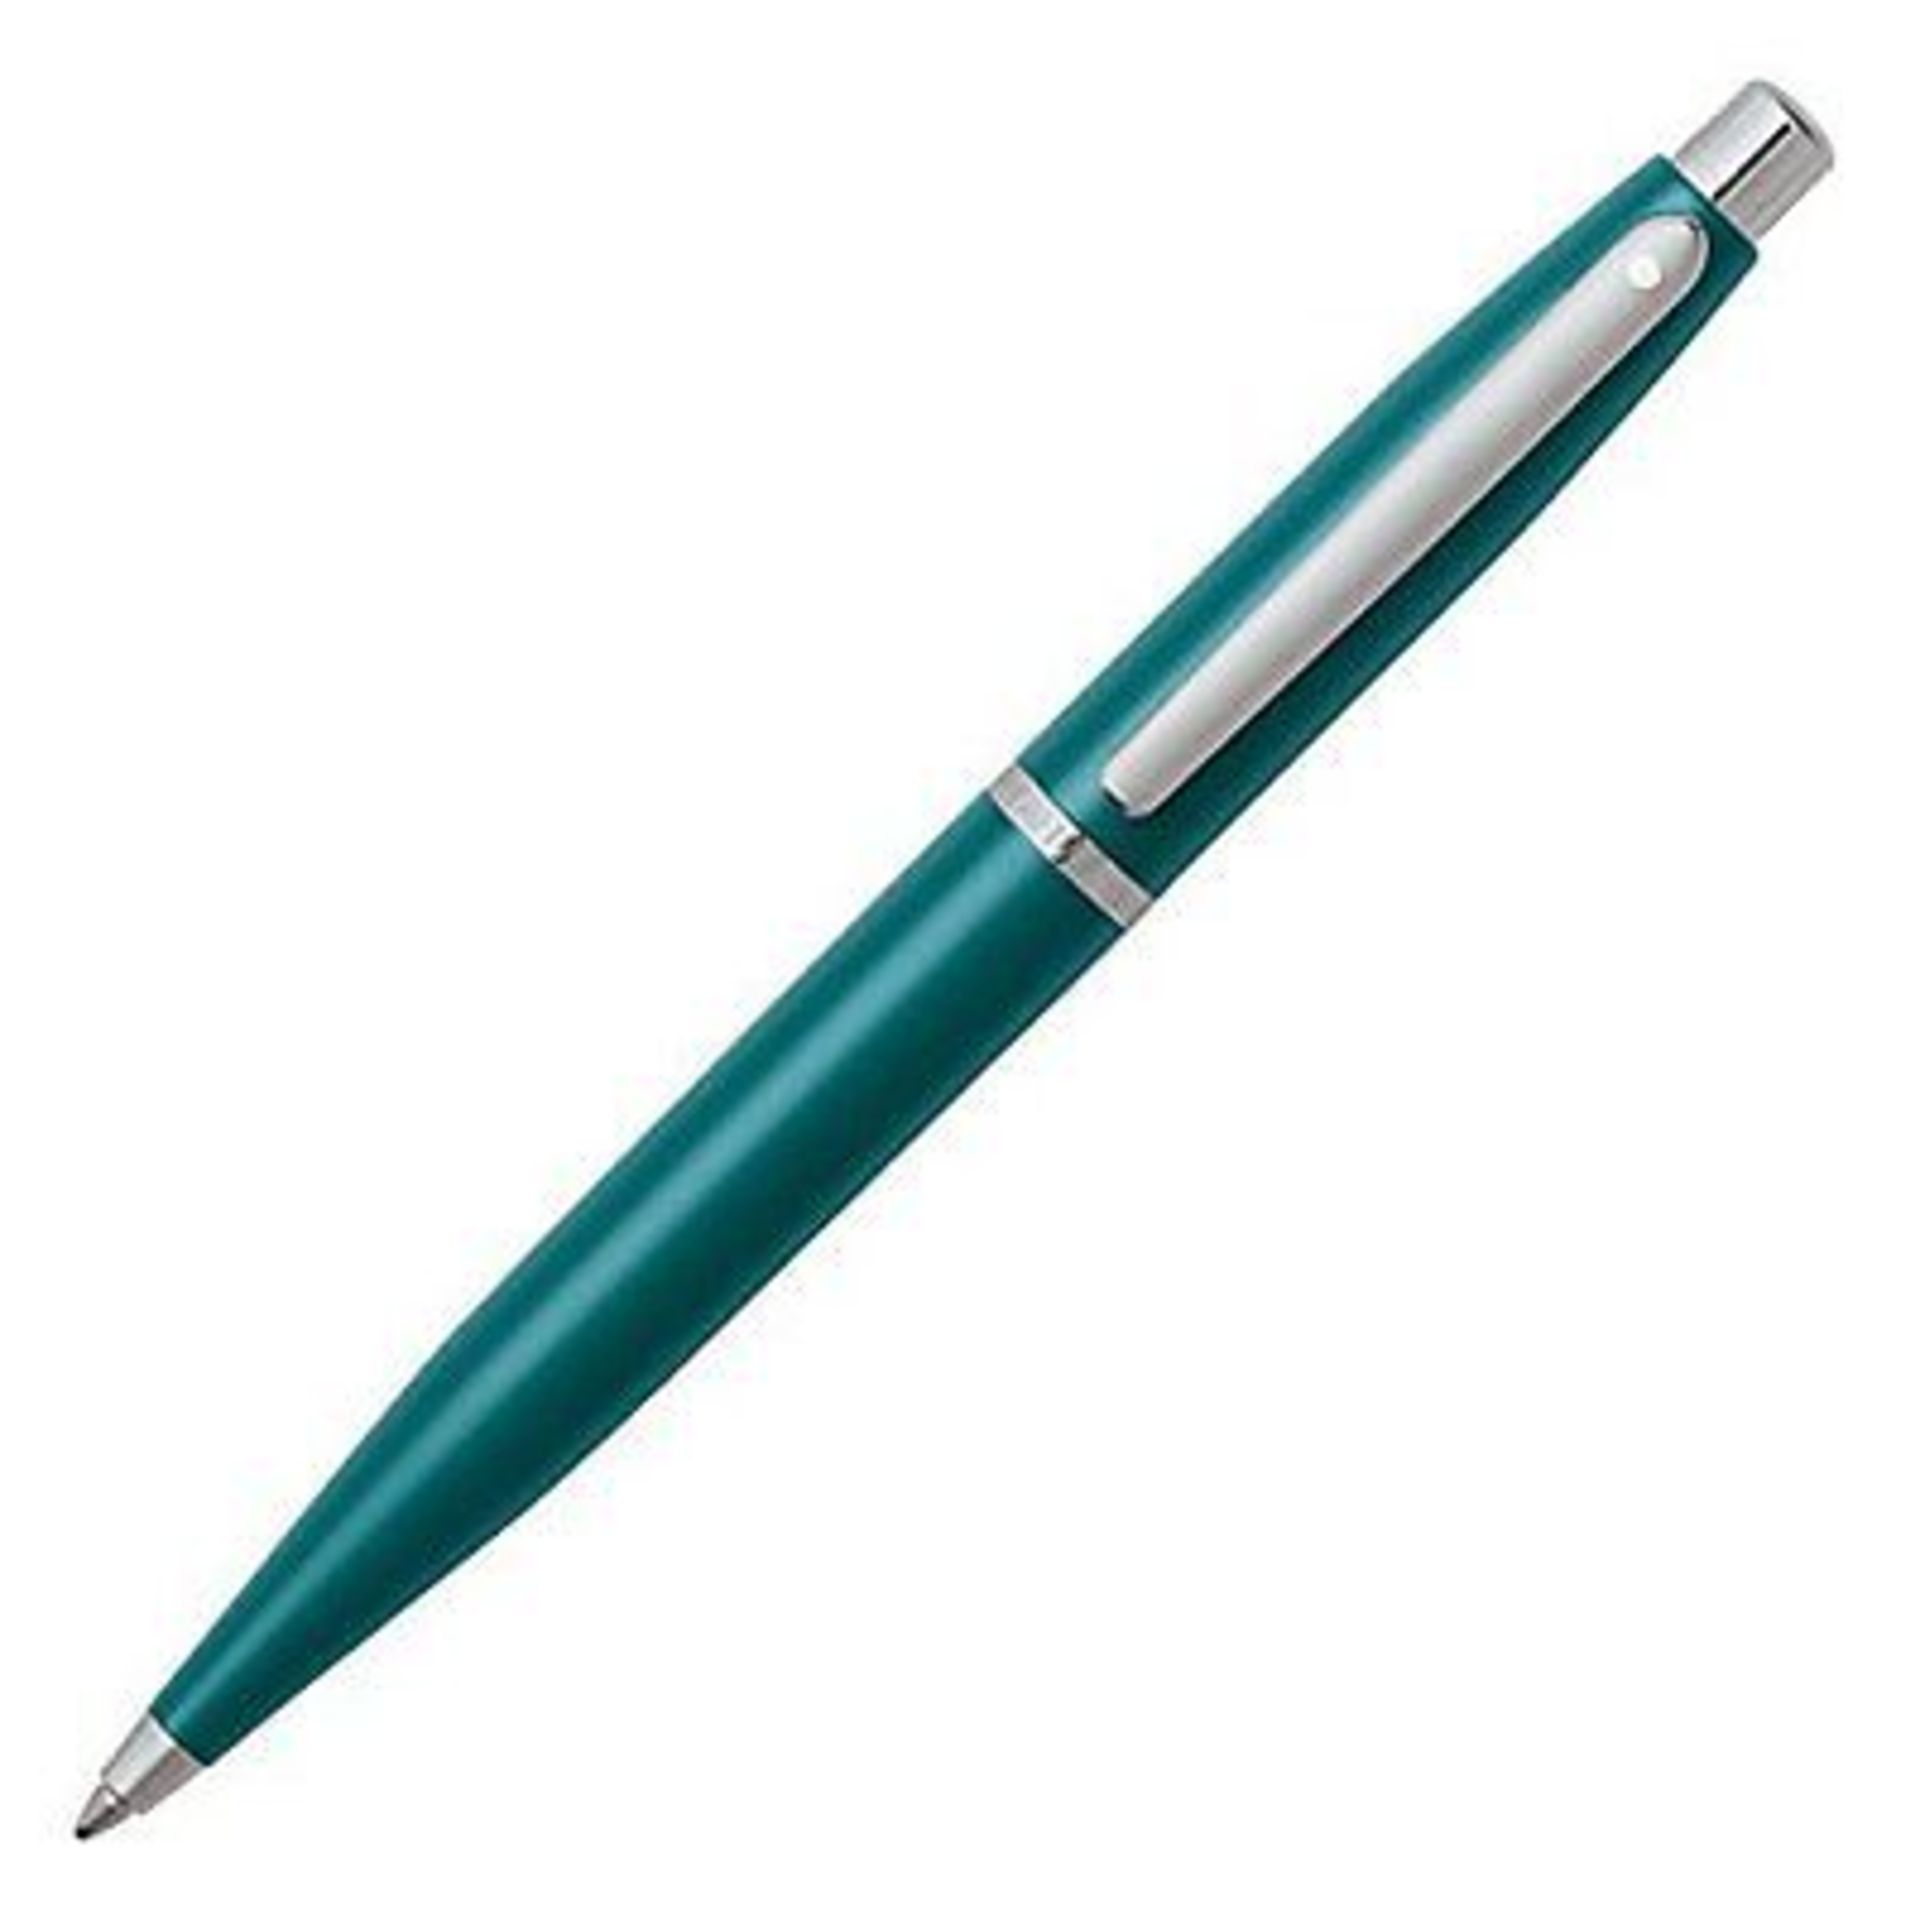 V Brand New Sheaffer Vfm Series Ballpoint Pen Ultra Mint eBay Price £18.76 X 2 YOUR BID PRICE TO